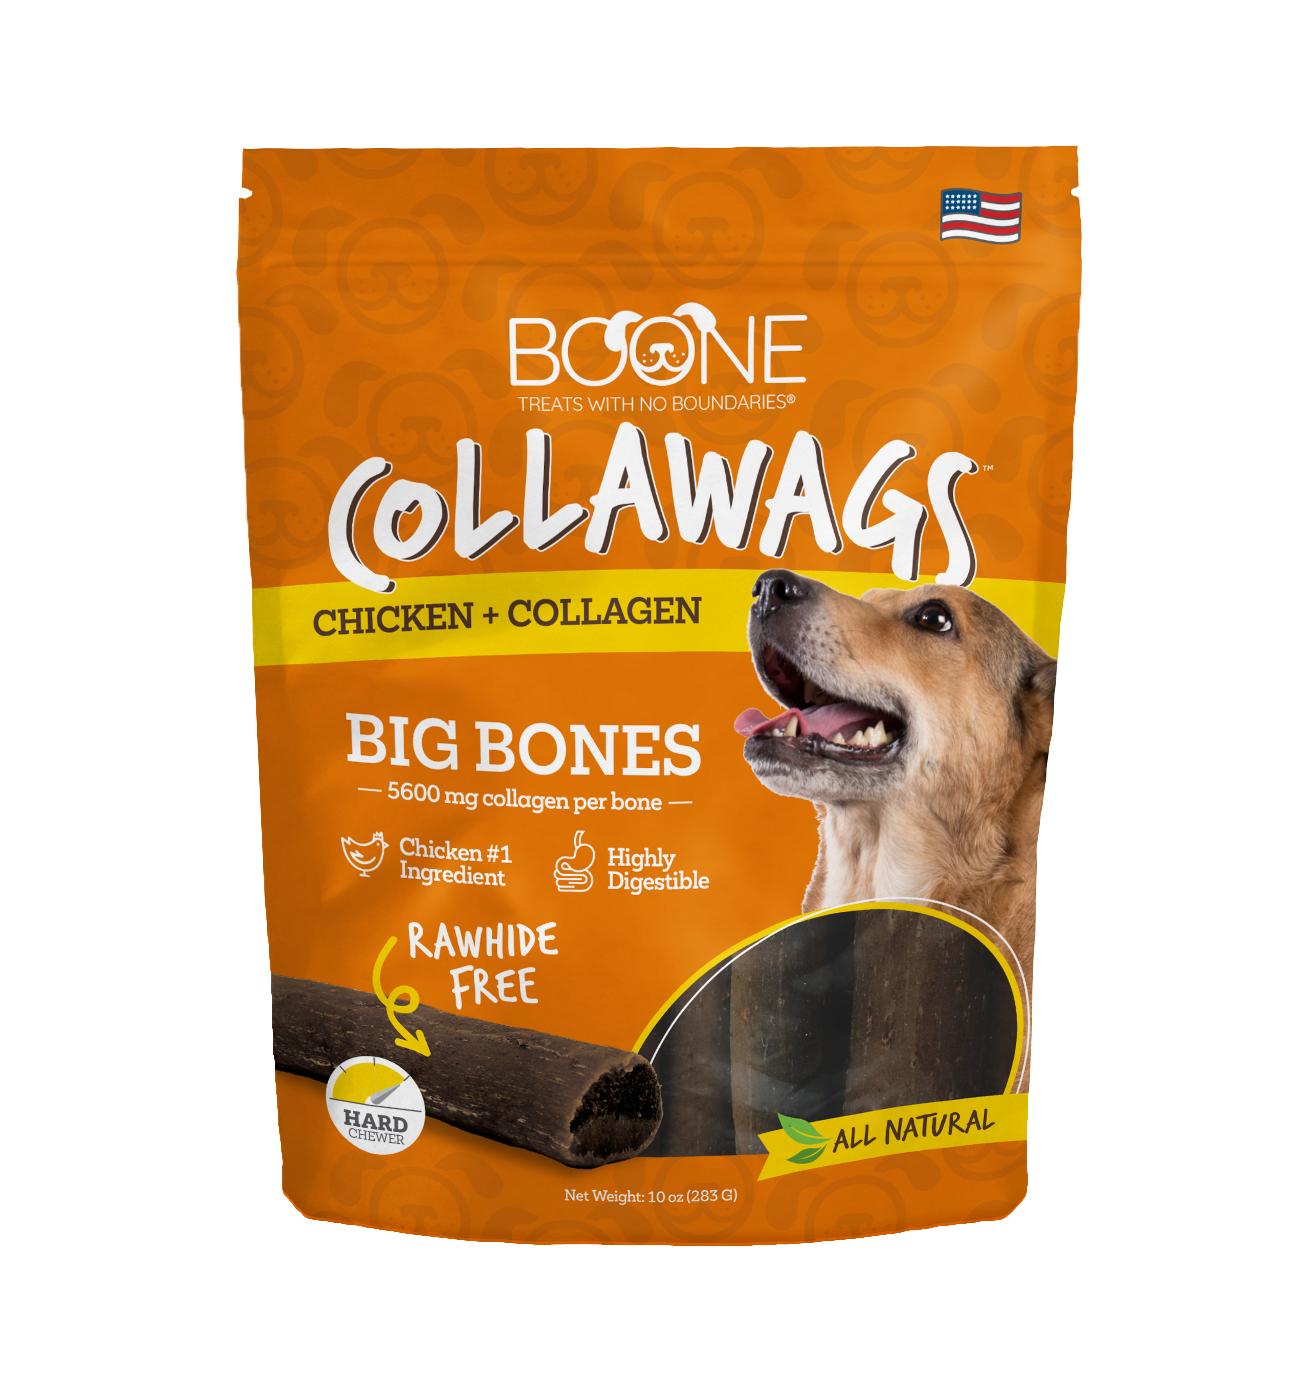 Tevra Pet Boone Collawags Chicken & Collagen Bones Dog Treats; image 1 of 2